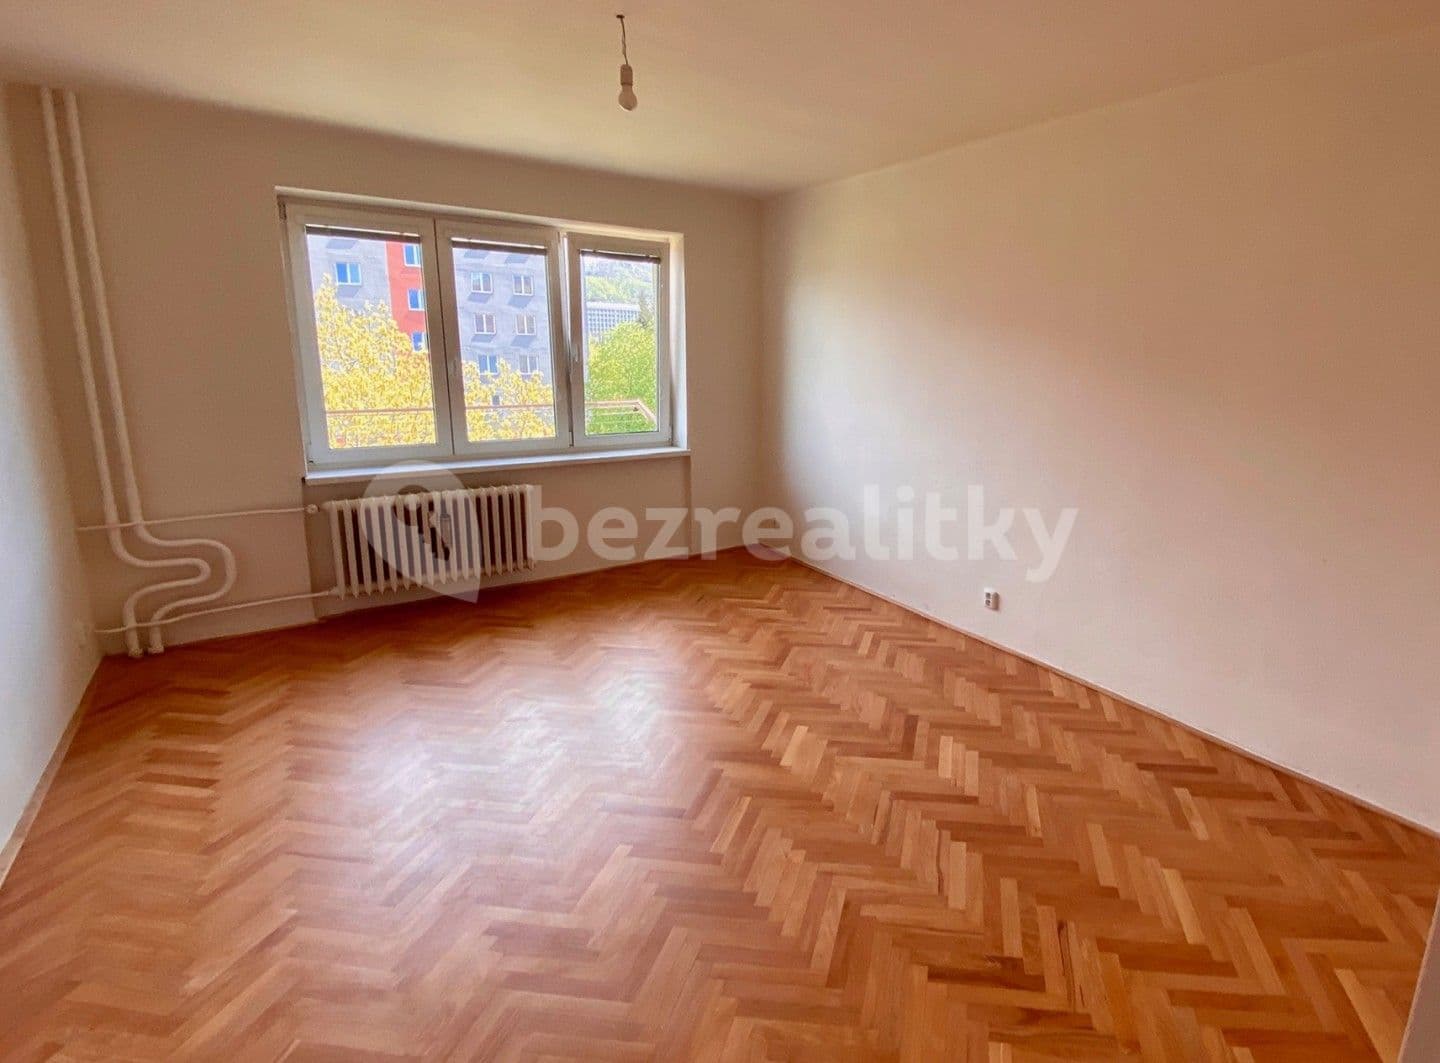 Predaj bytu 3-izbový 64 m², Francouzská, Kopřivnice, Moravskoslezský kraj